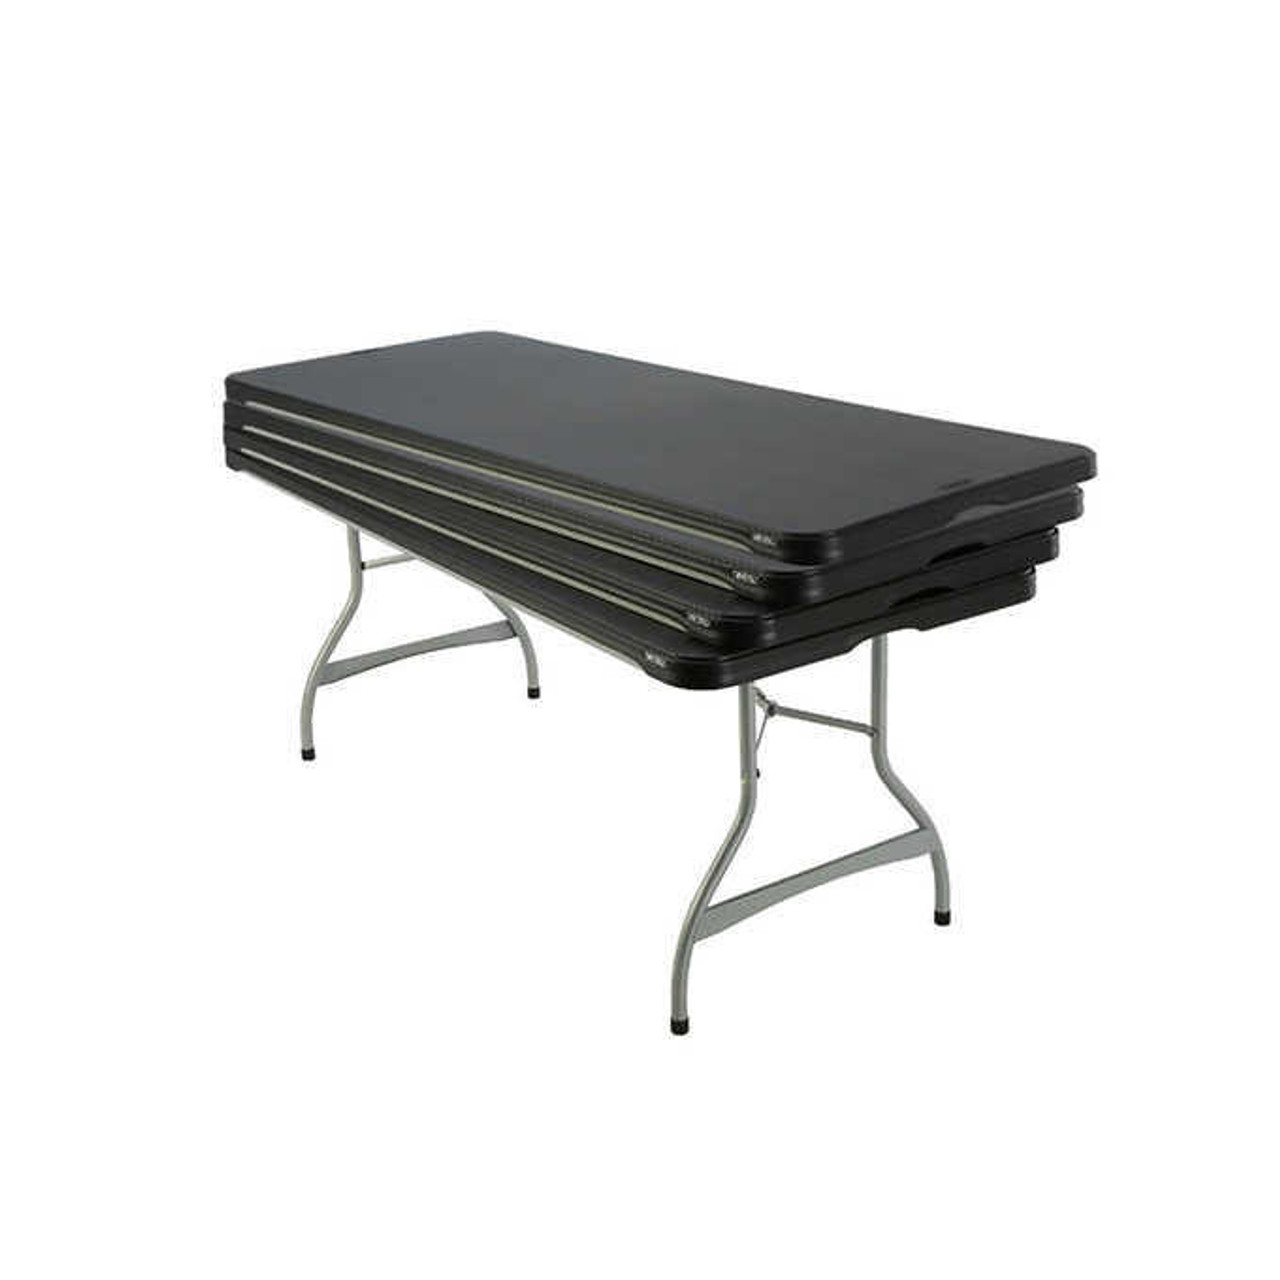 LIFETIME Lifetime 182.9 cm (6 ft.) Commercial Folding Tables, 4-Pack - White and Black 